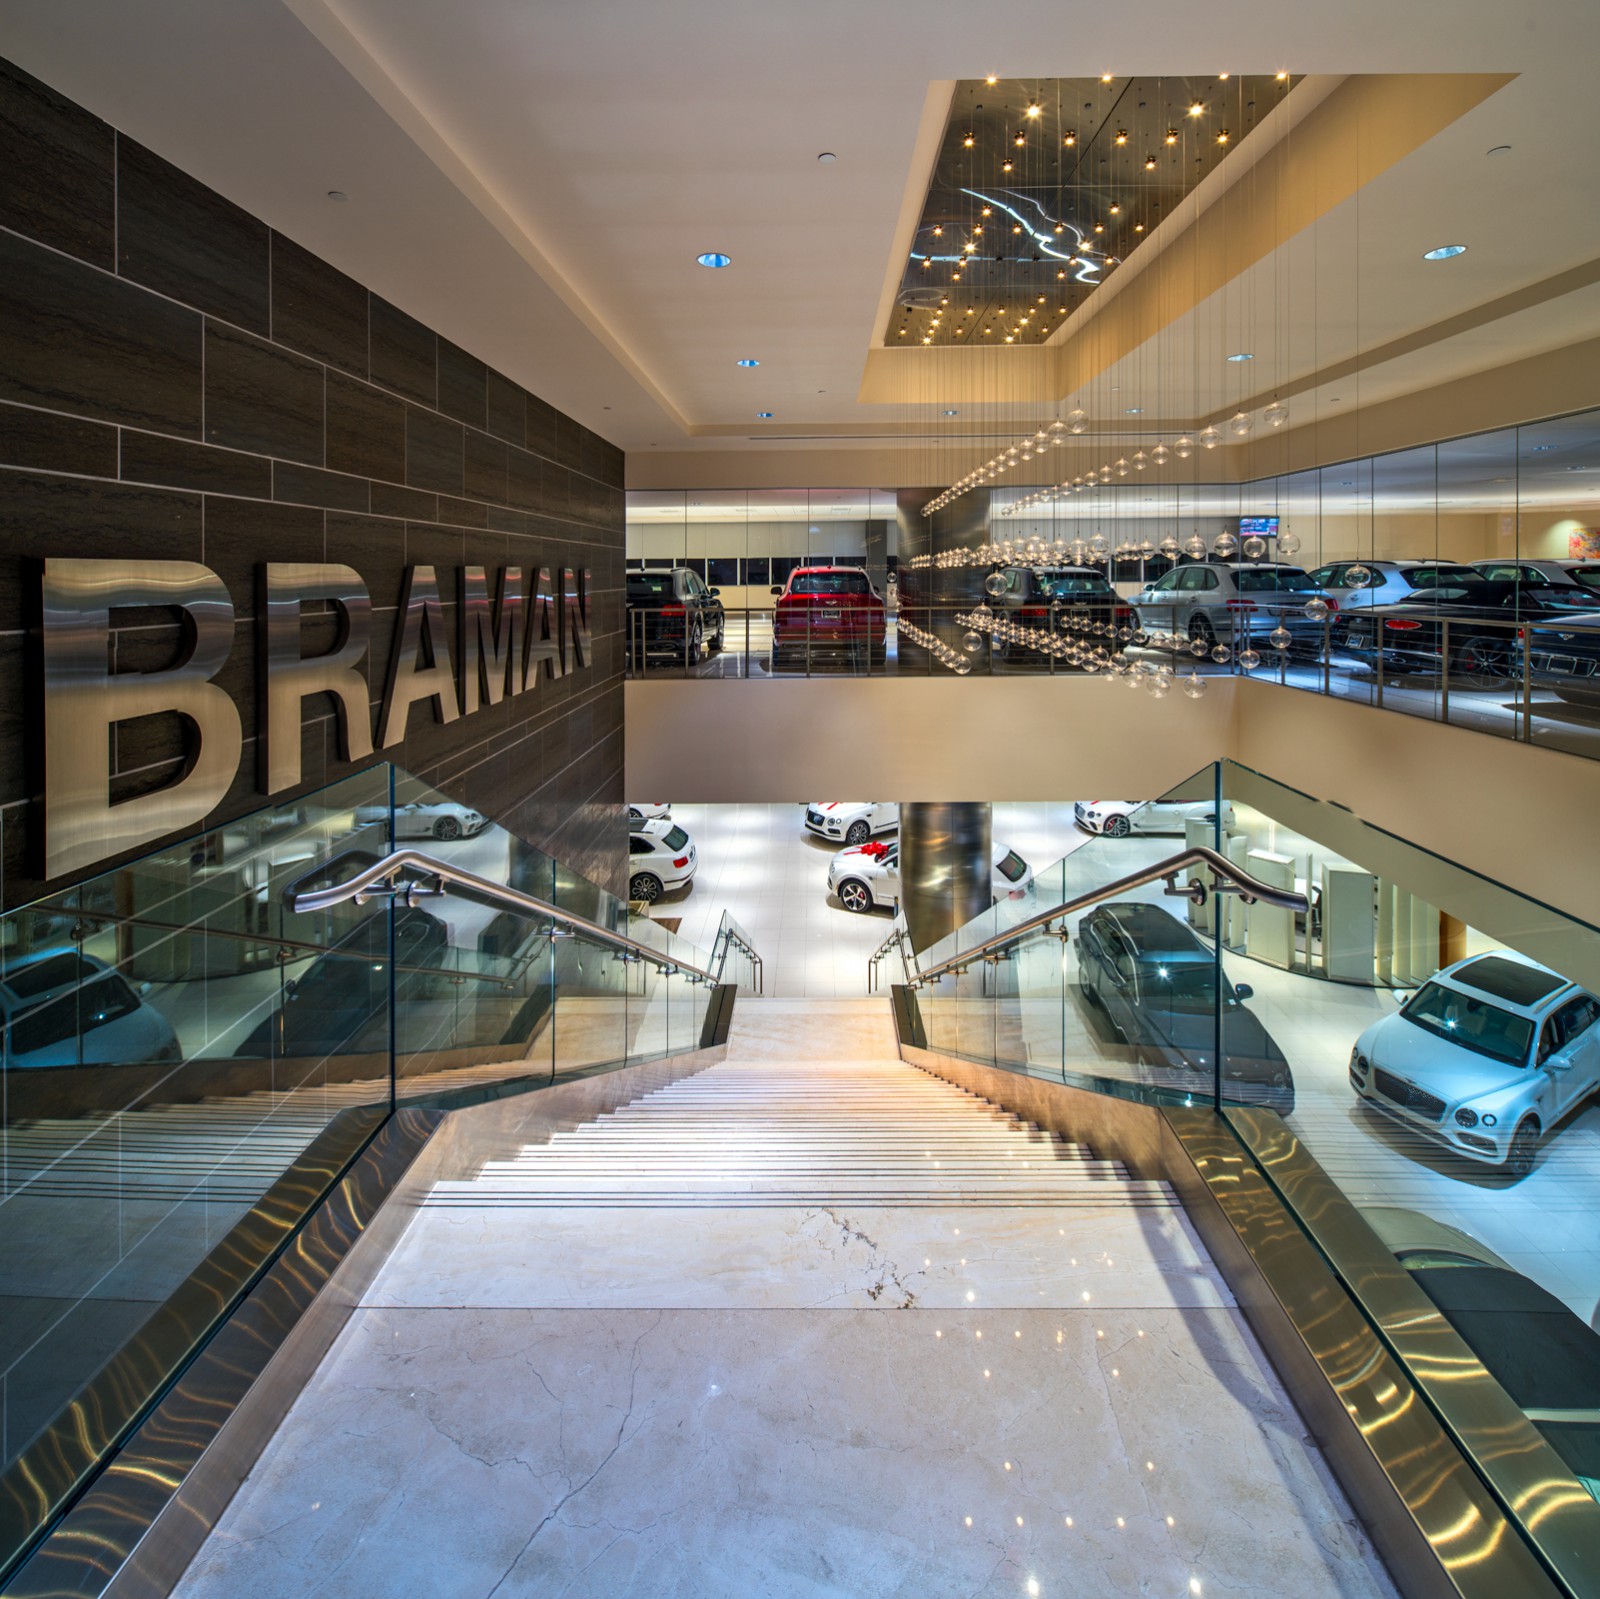 Braman Staircase - Braman Motors Building